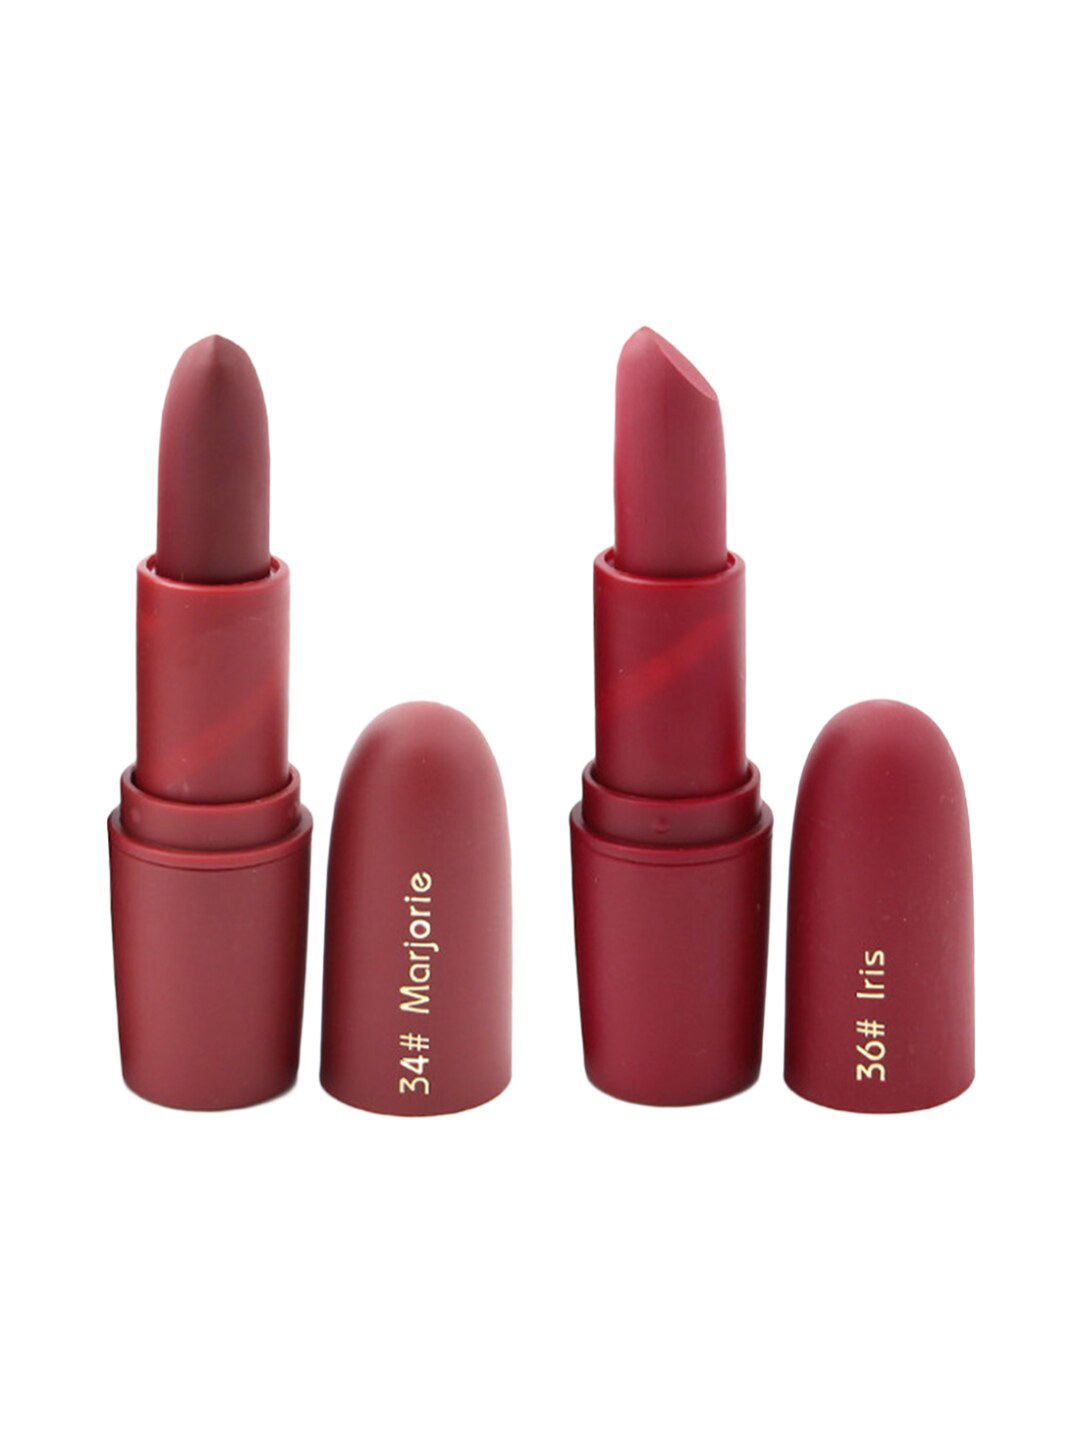 MISS ROSE Professional Make-Up Set of 2 Matte Creamy Lipsticks - Marjorie 34 & Iris 36 Price in India